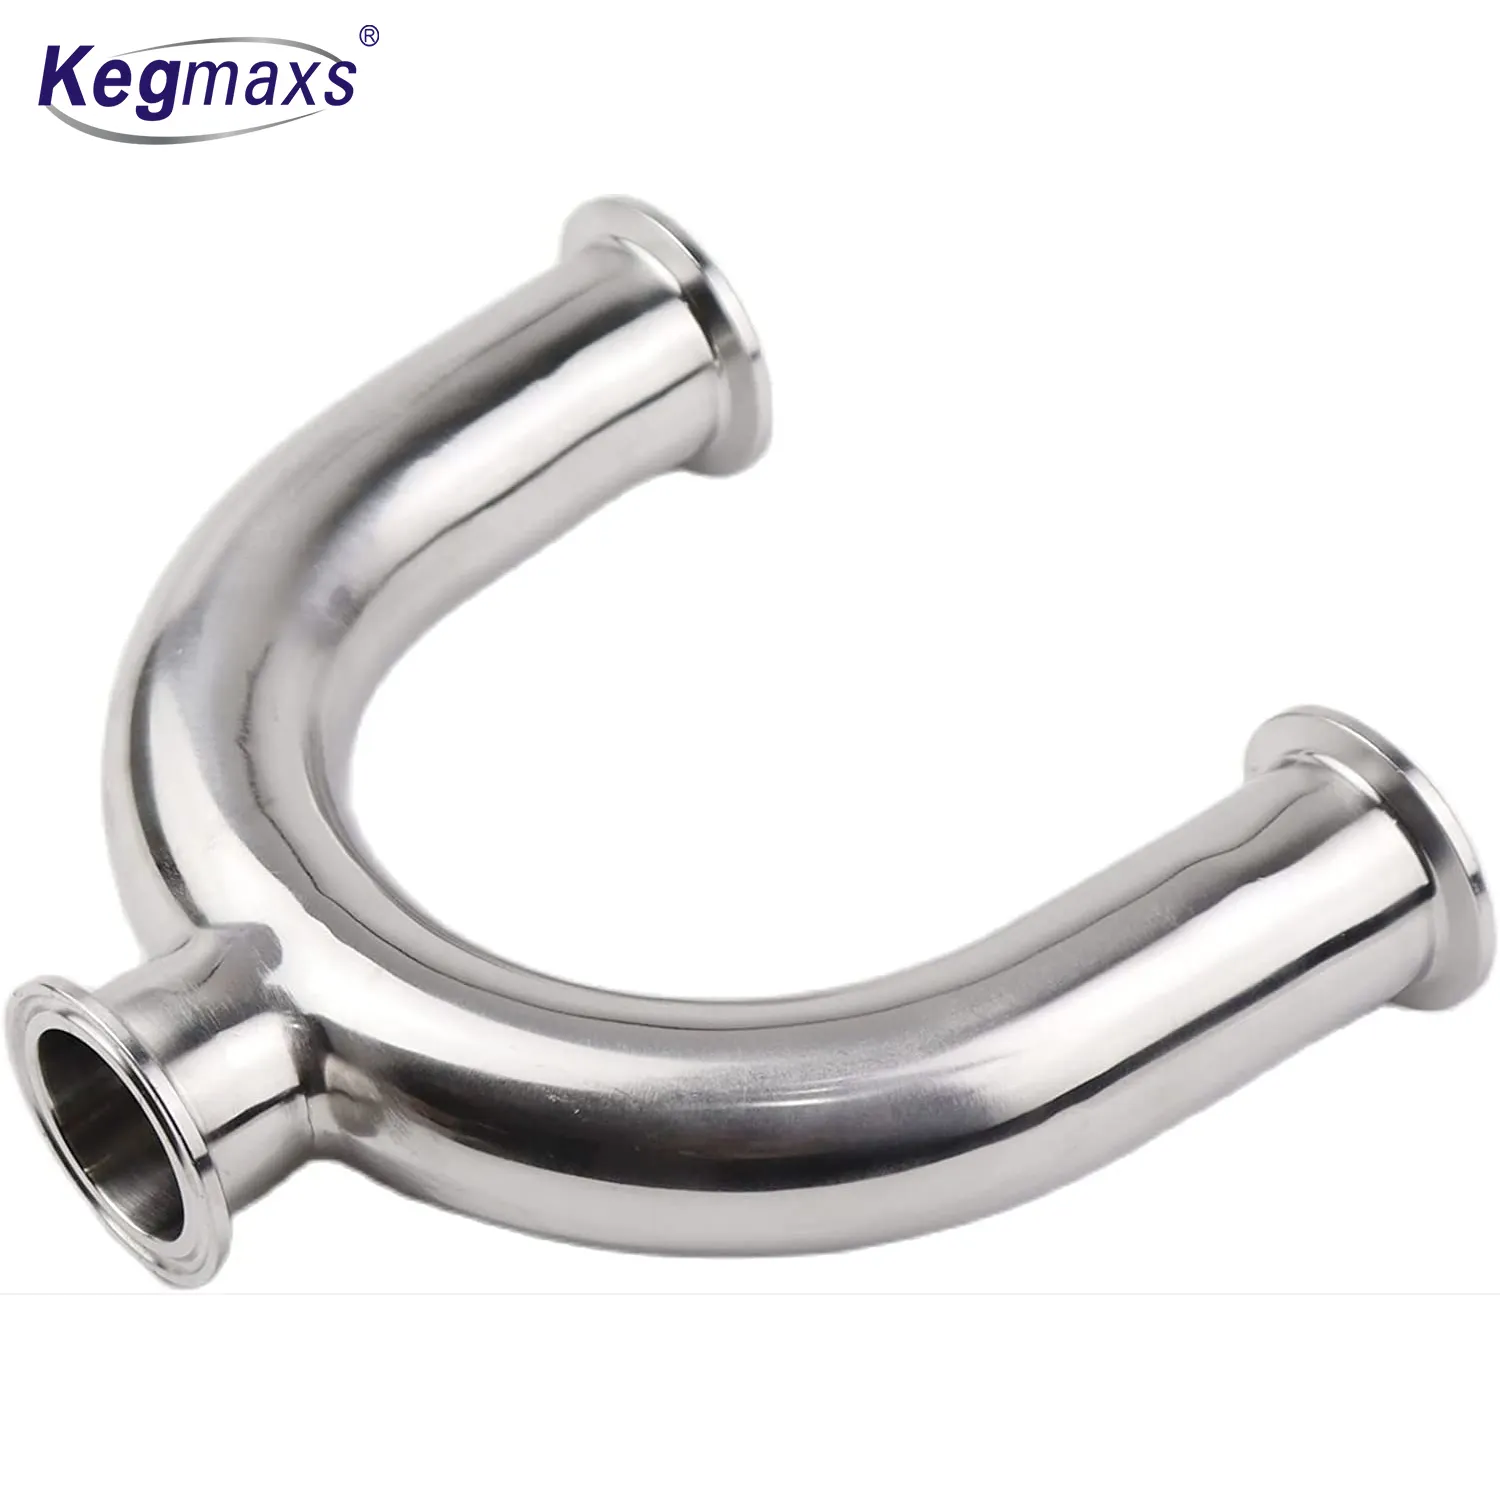 Kegmaxs GoodQuality 3 Way U Type 304 Stainless Steel TEE Sanitary Ferrule Pipe Fittings 1.5" Tri-clamp, 38mm Pipe OD Homebrew